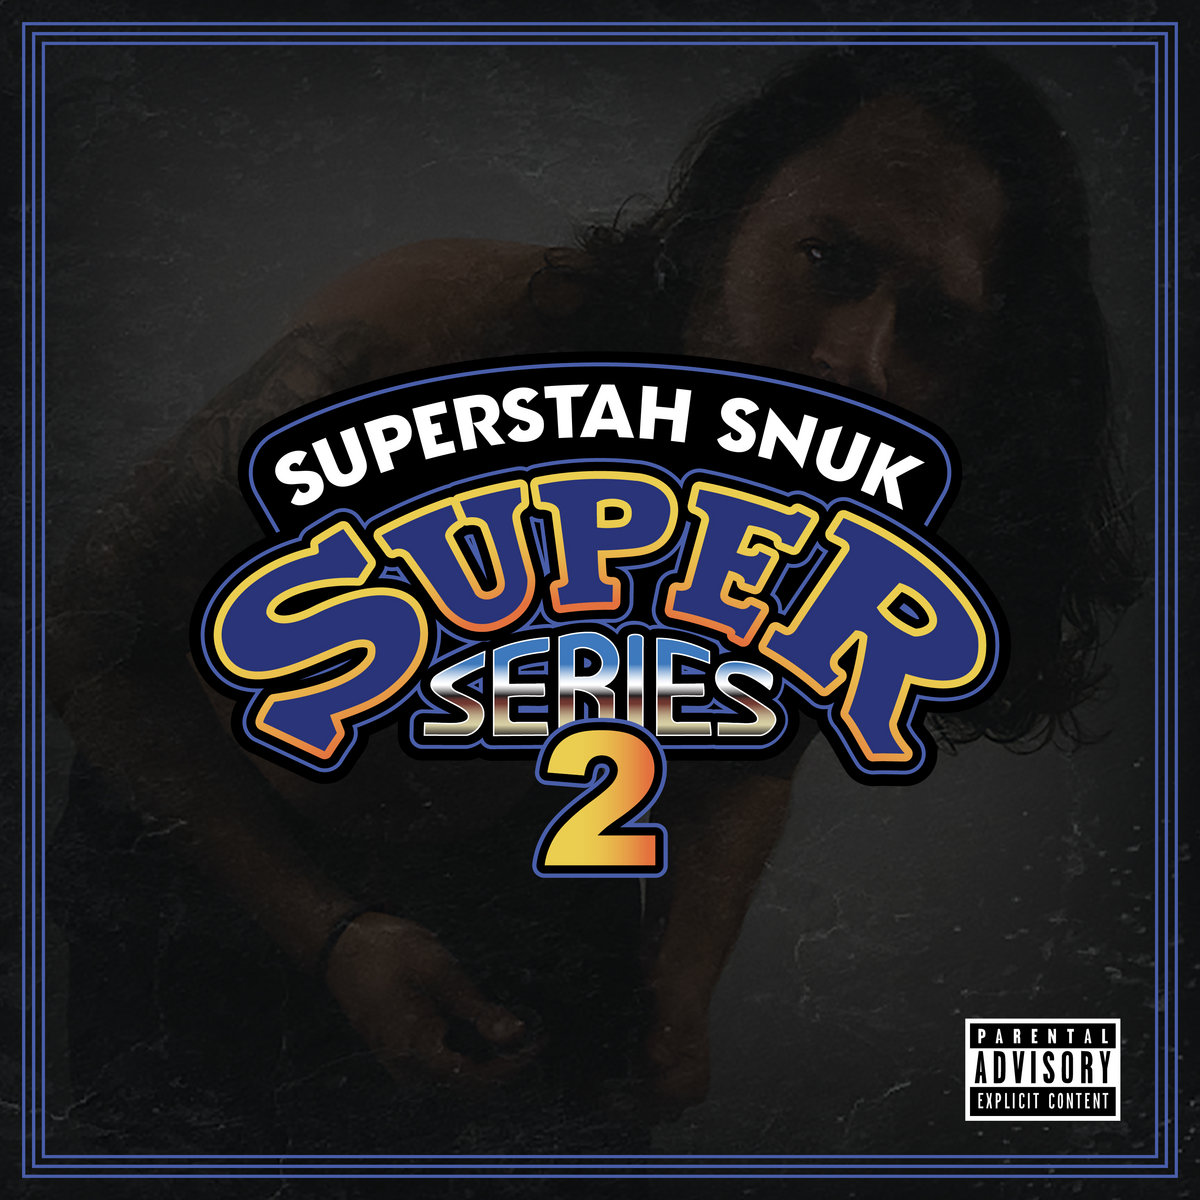 Super_series_2_superstah_snuk